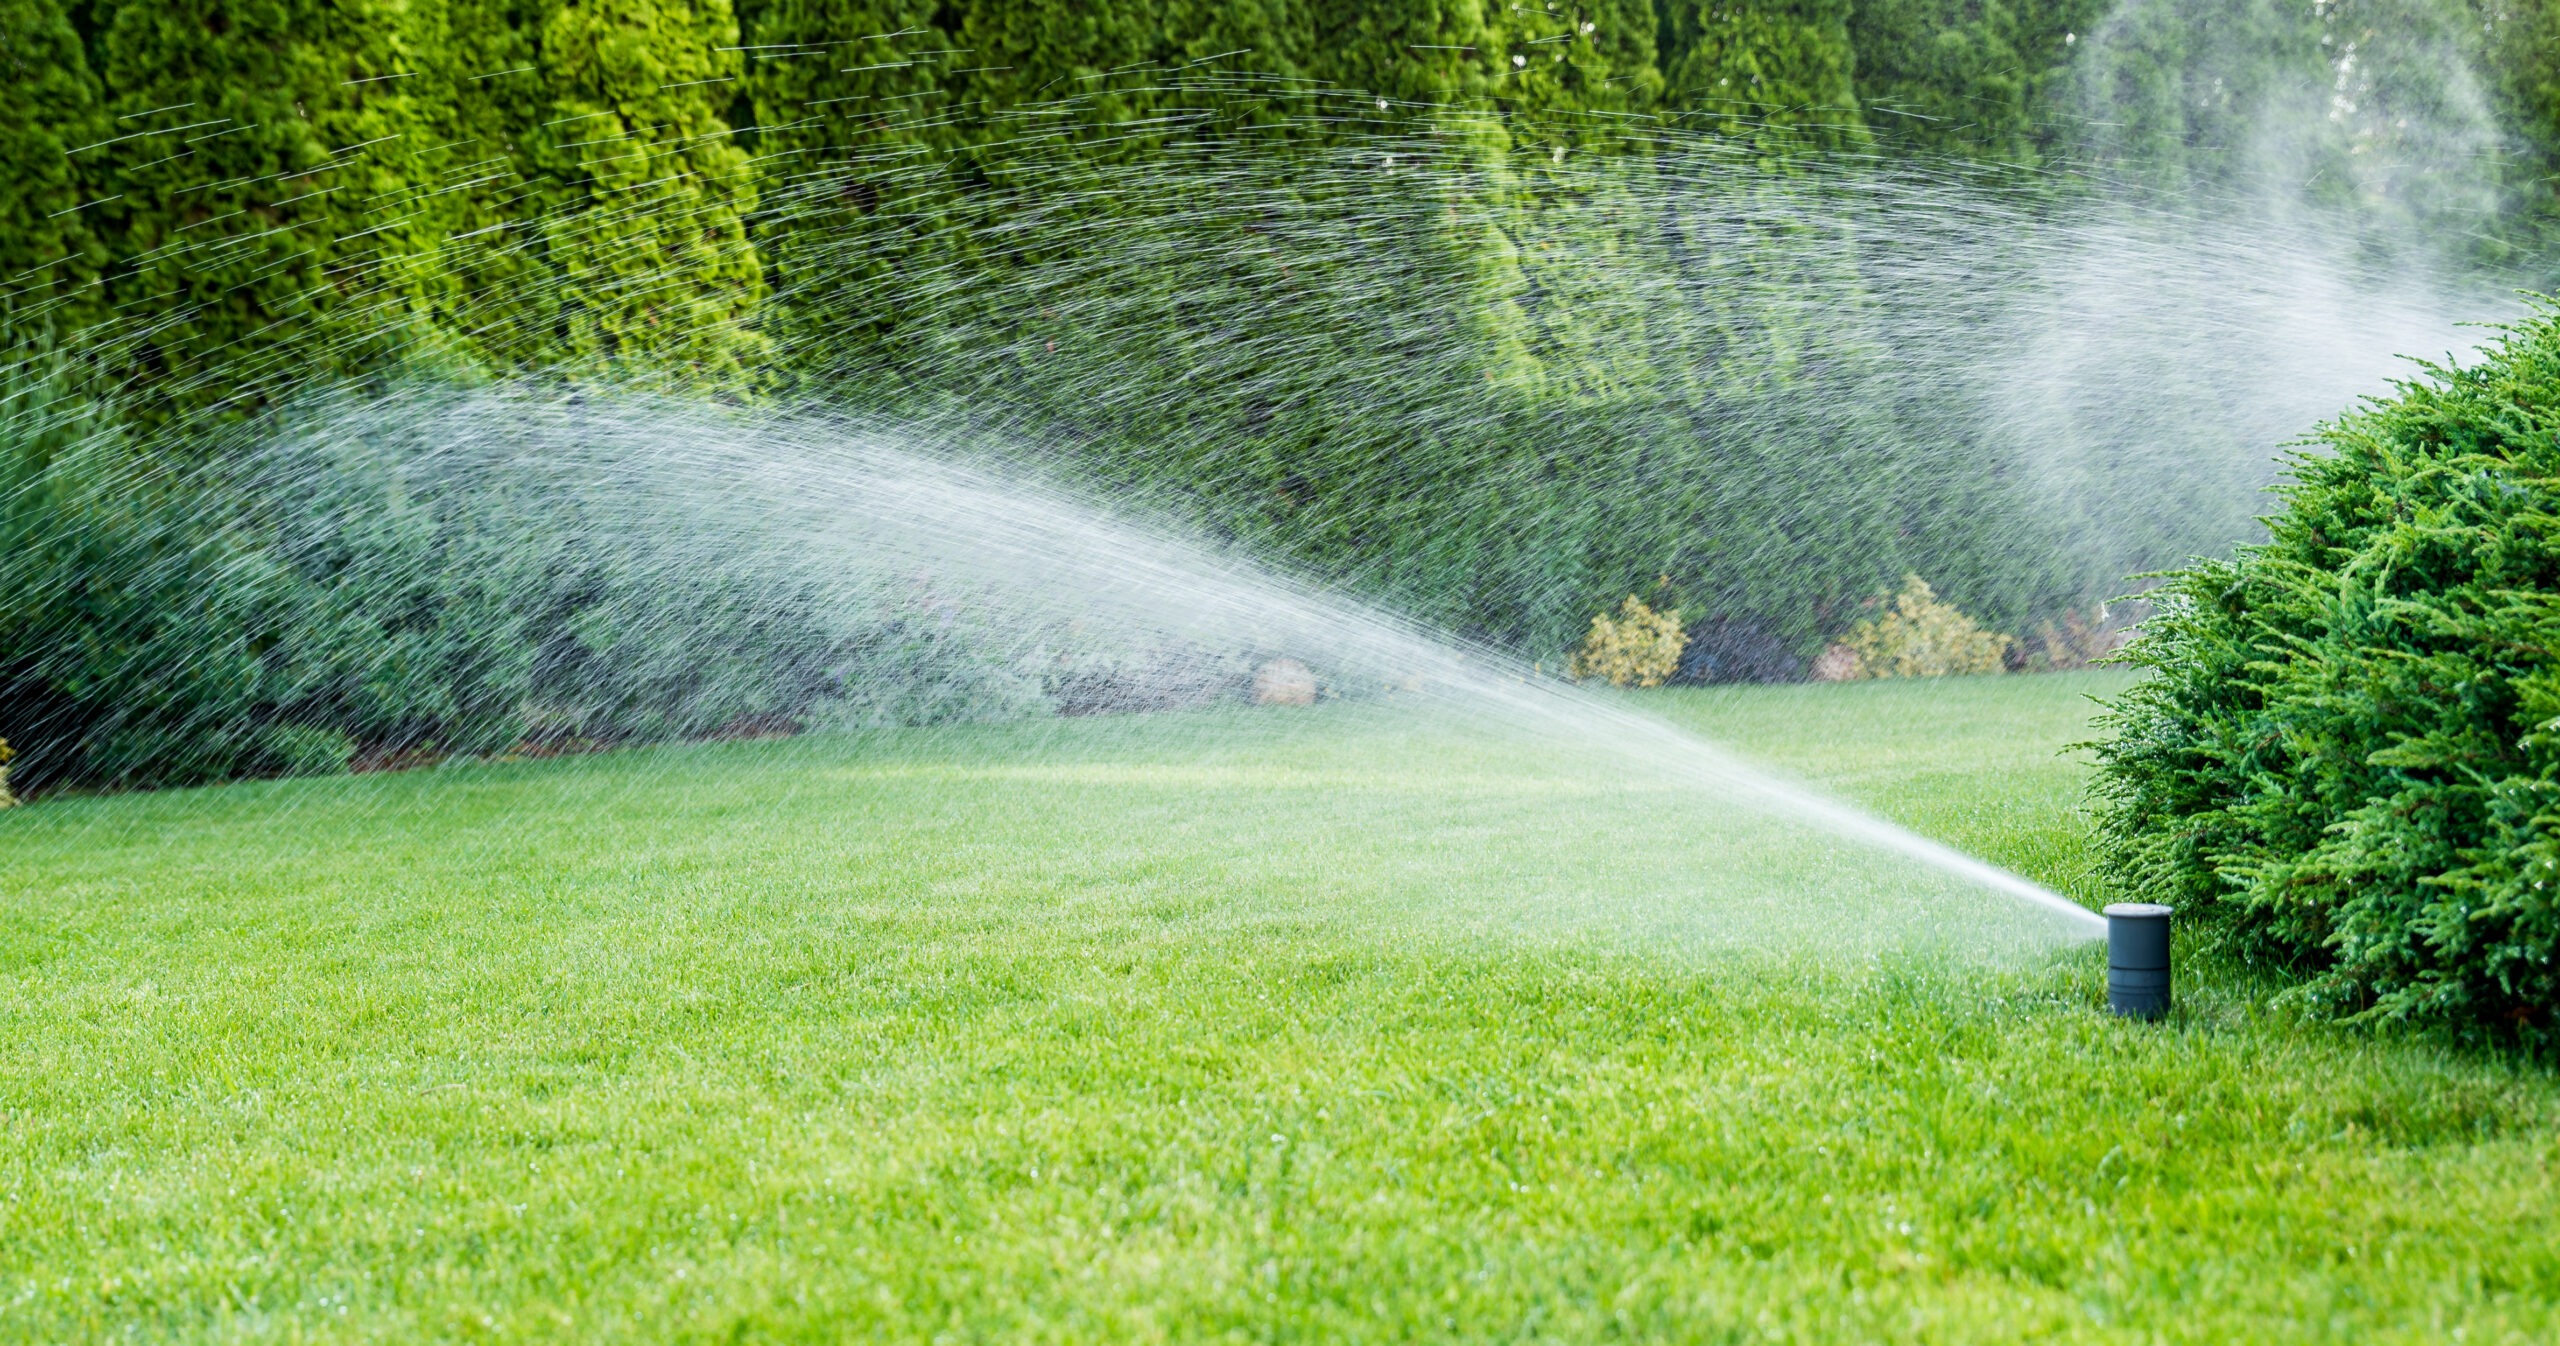 spray head jet shooting water across a vibrant green lawn